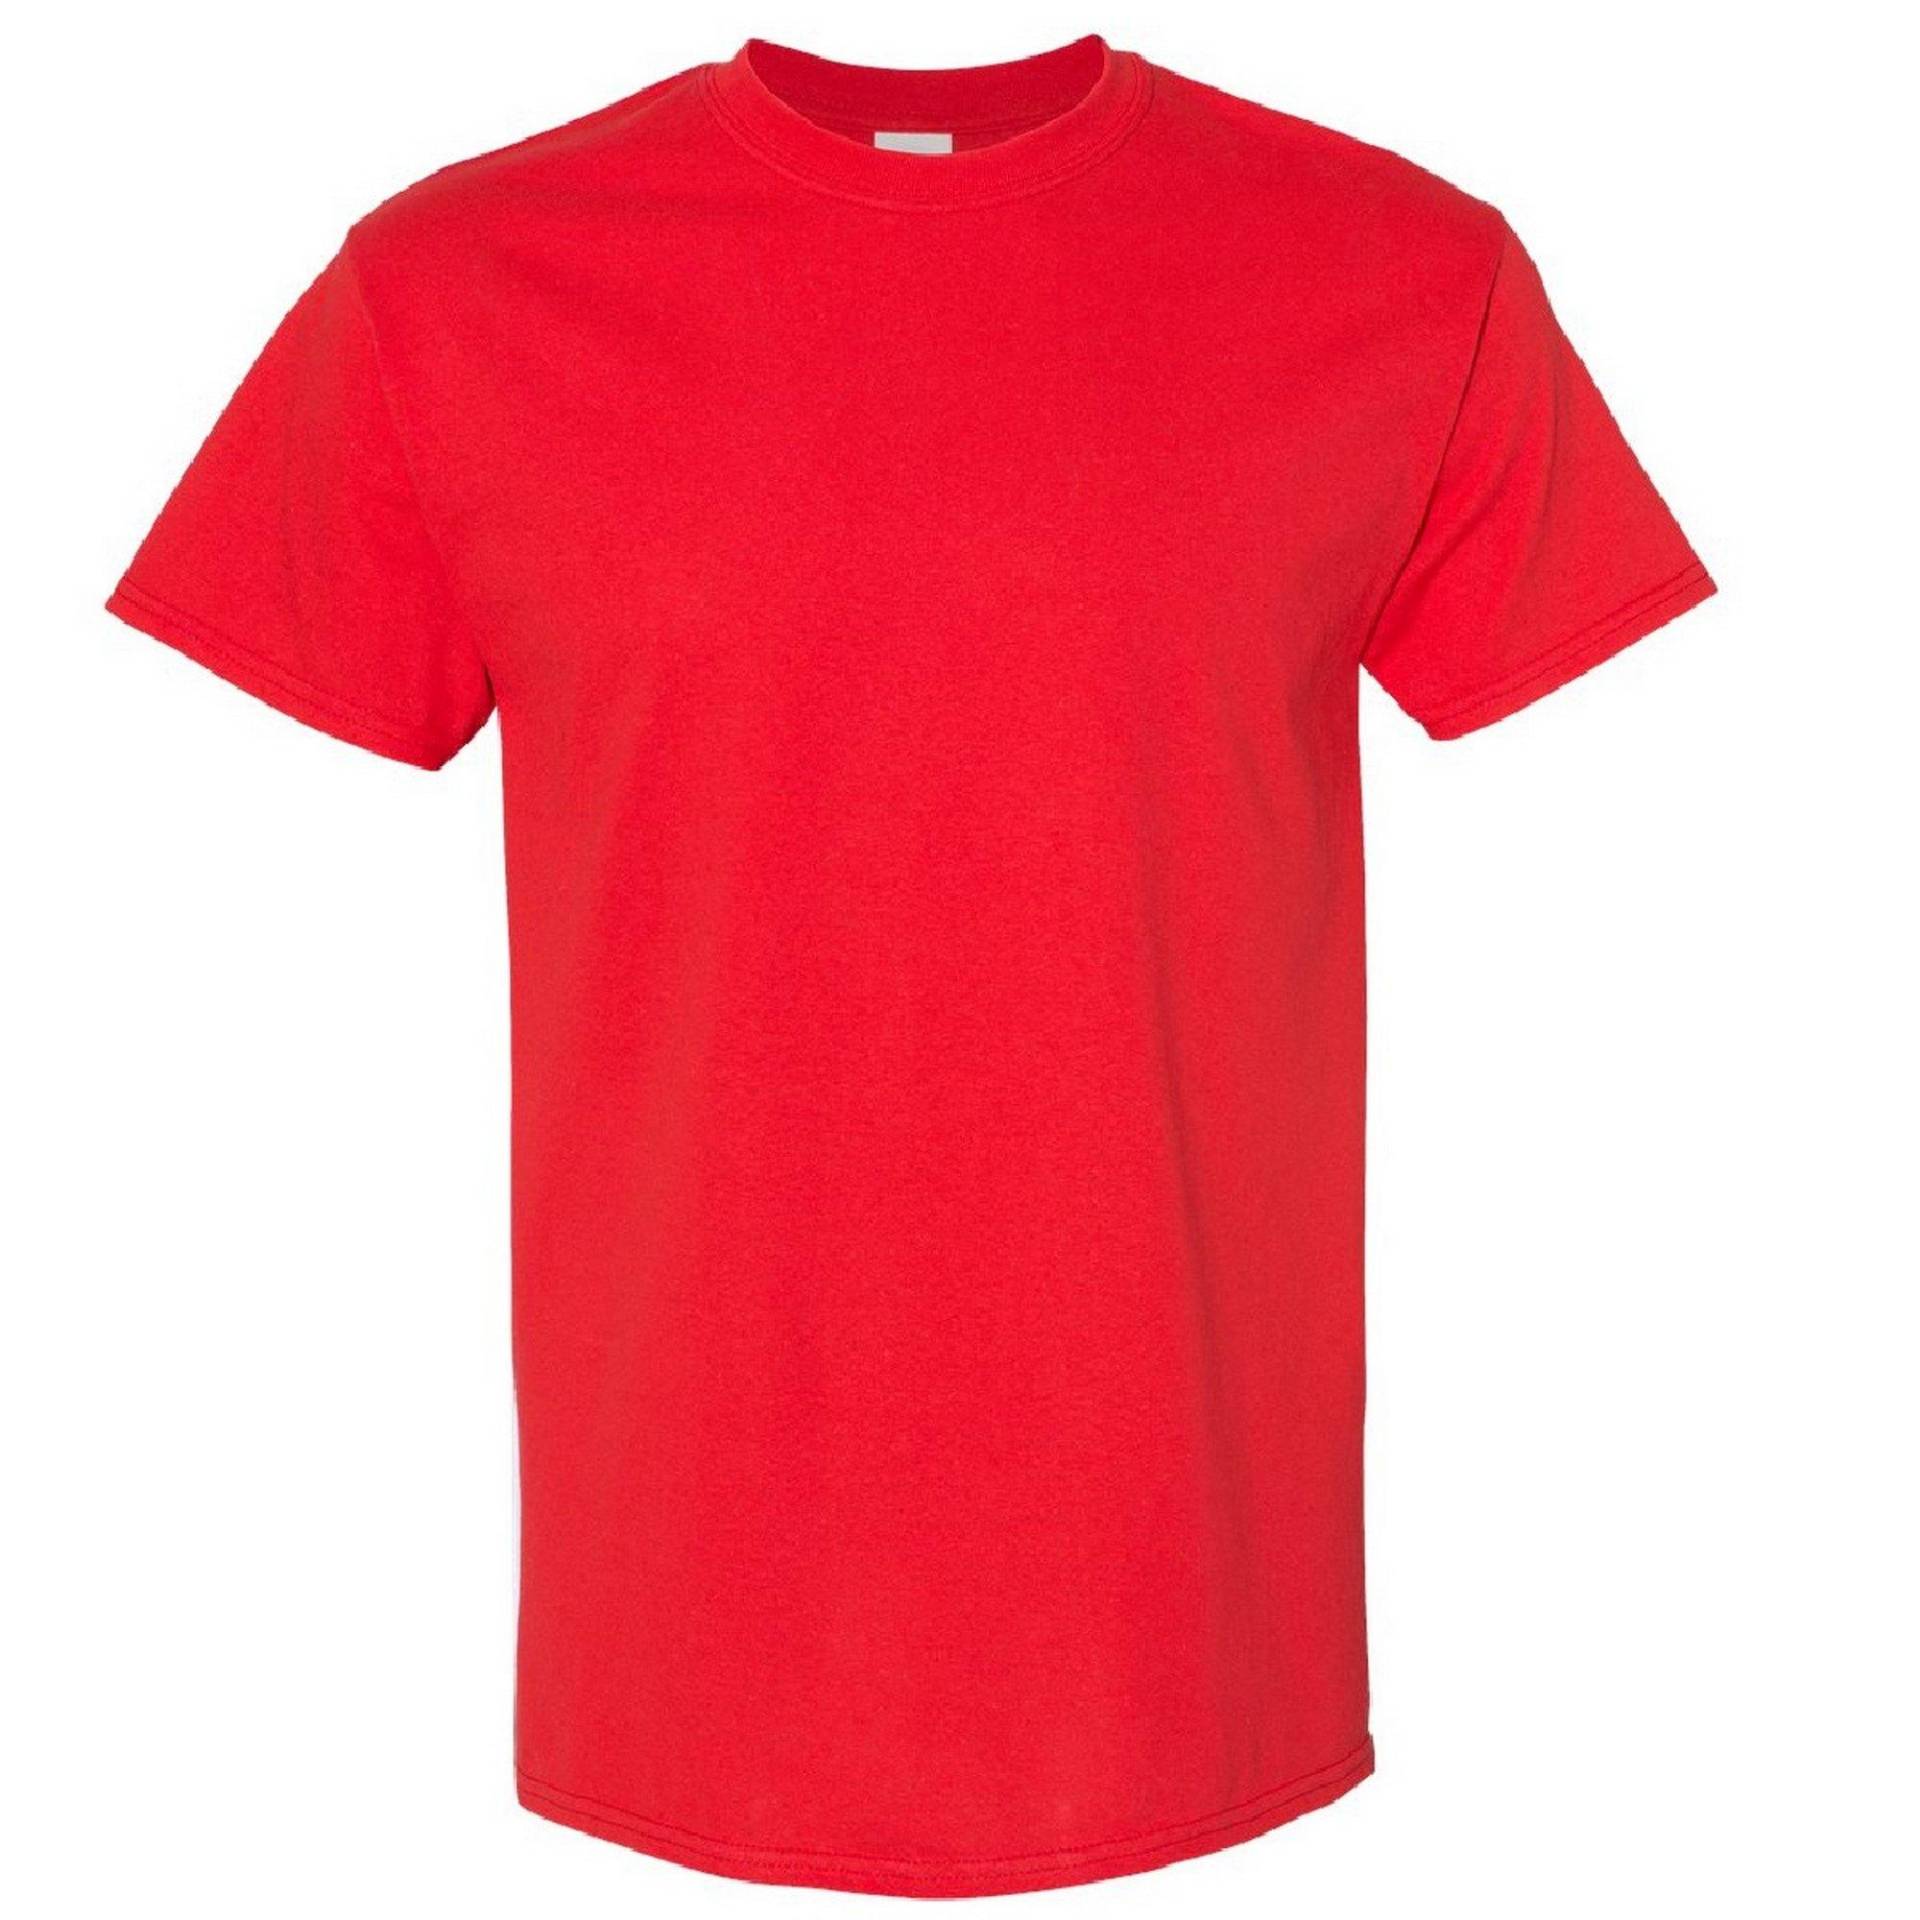 Tshirt (5 Stückpackung) Herren Rot Bunt S von Gildan